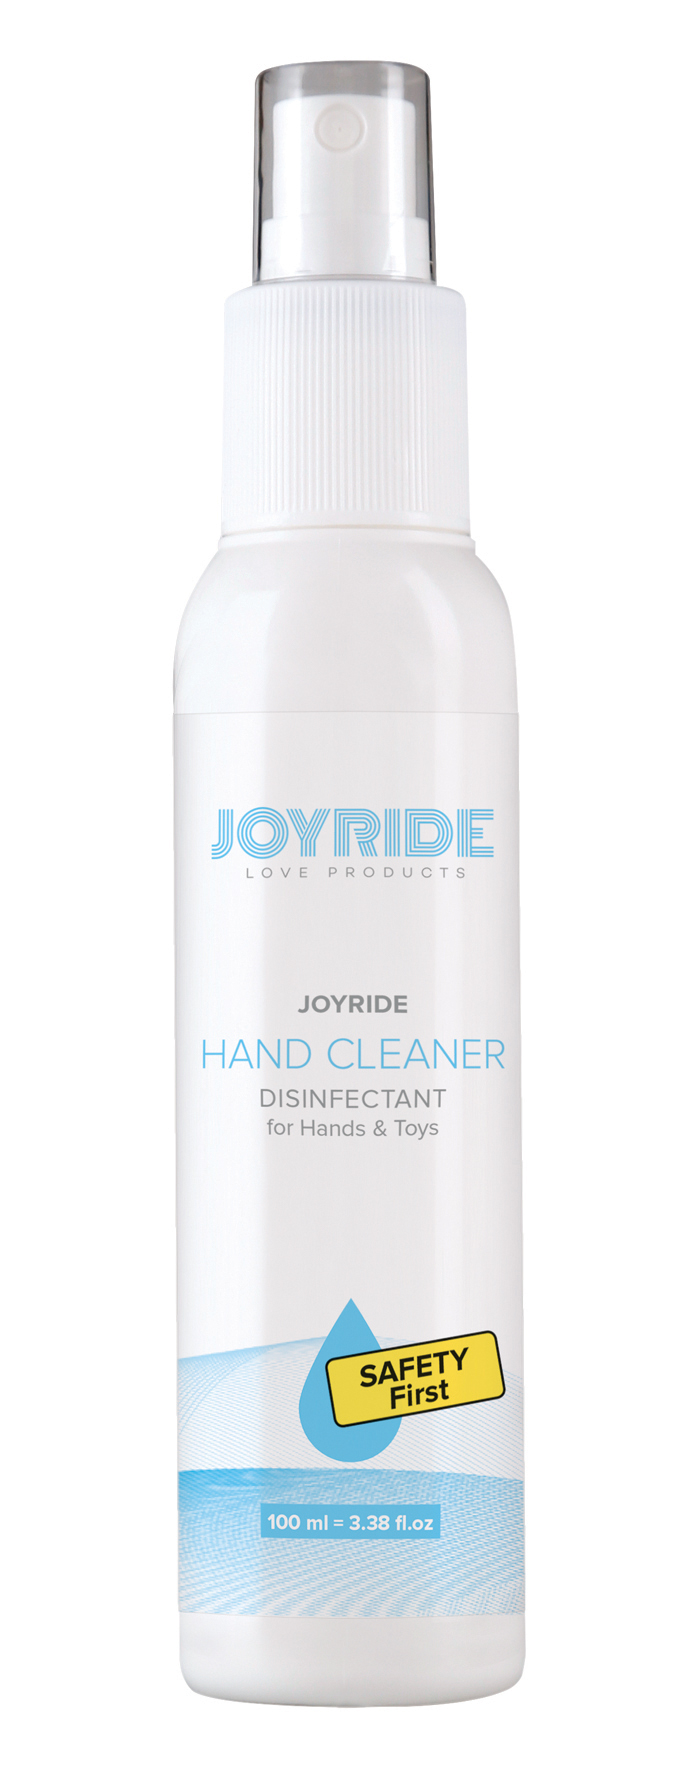 JOYRIDE Hand Cleaner for Hands & Toys 100 ml